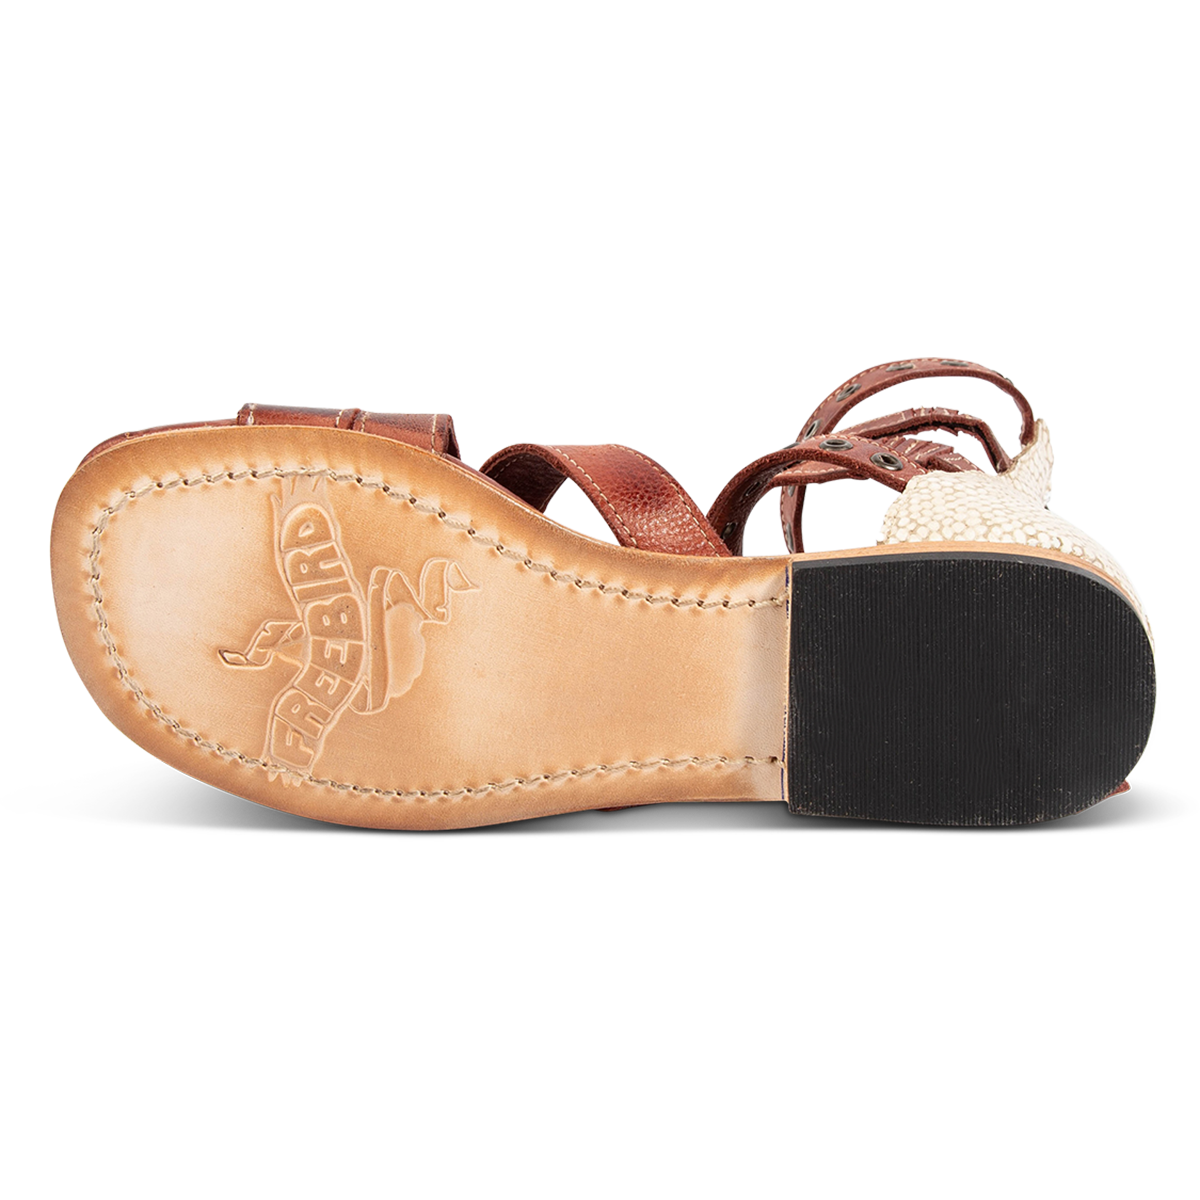 Leather sole imprinted with FREEBIRD on women's Sydney rust multi leather gladiator sandal